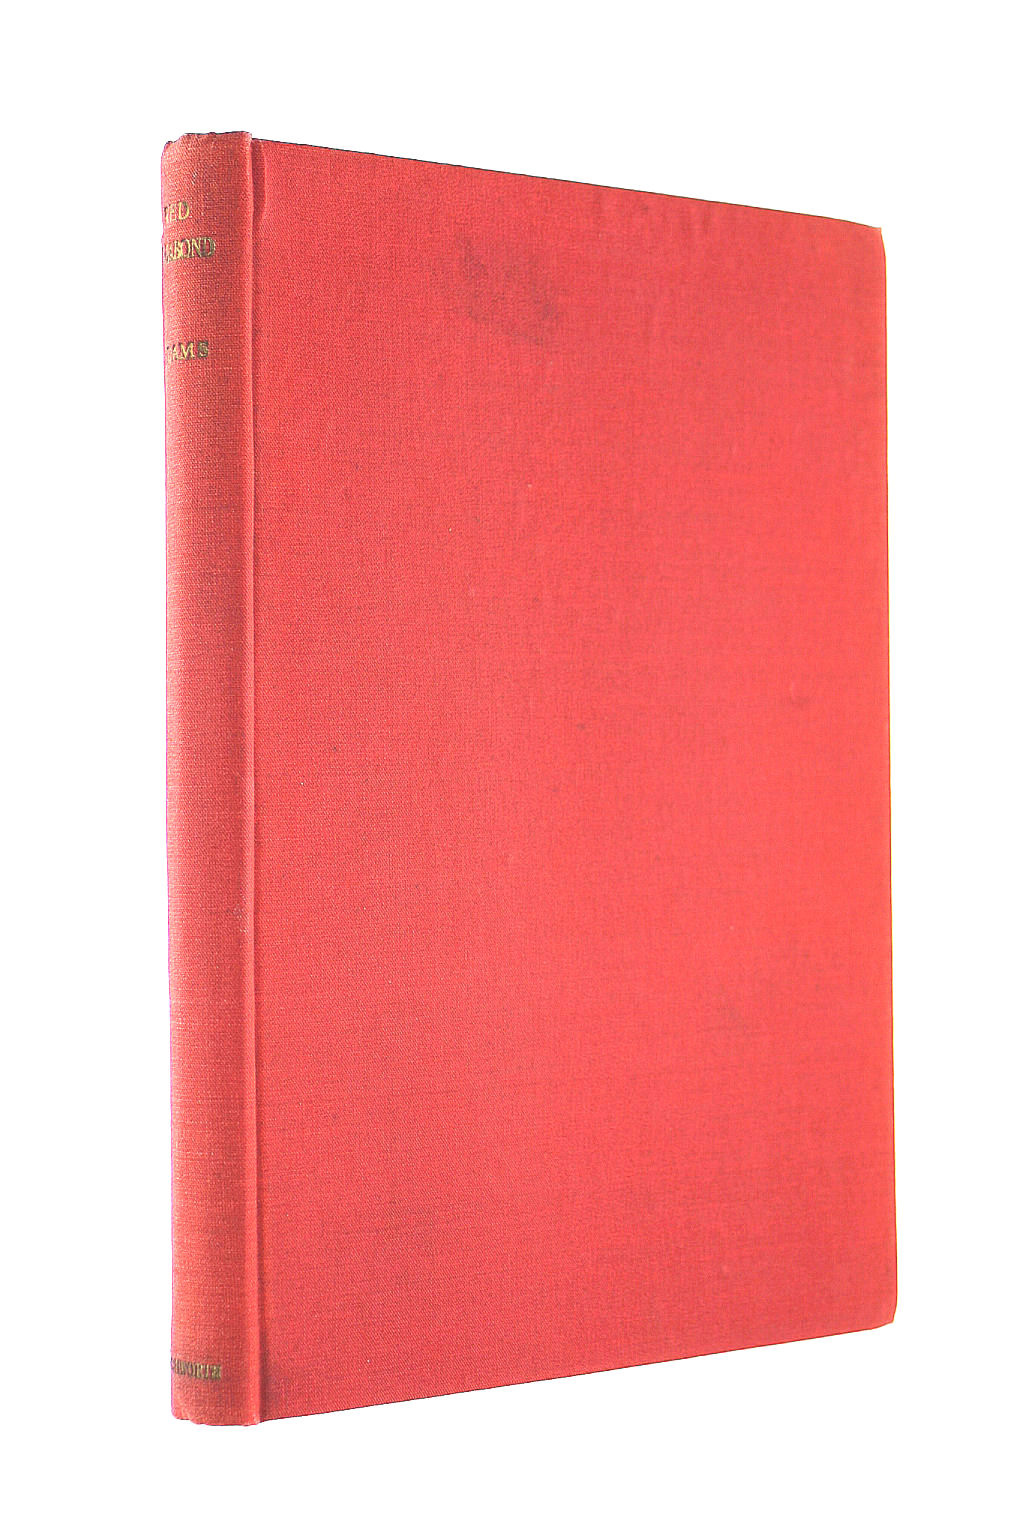 ADAMS, G.D., ILLUSTRATED BY WATKINS-PITCHFORD, D.J. - Red Vagabond